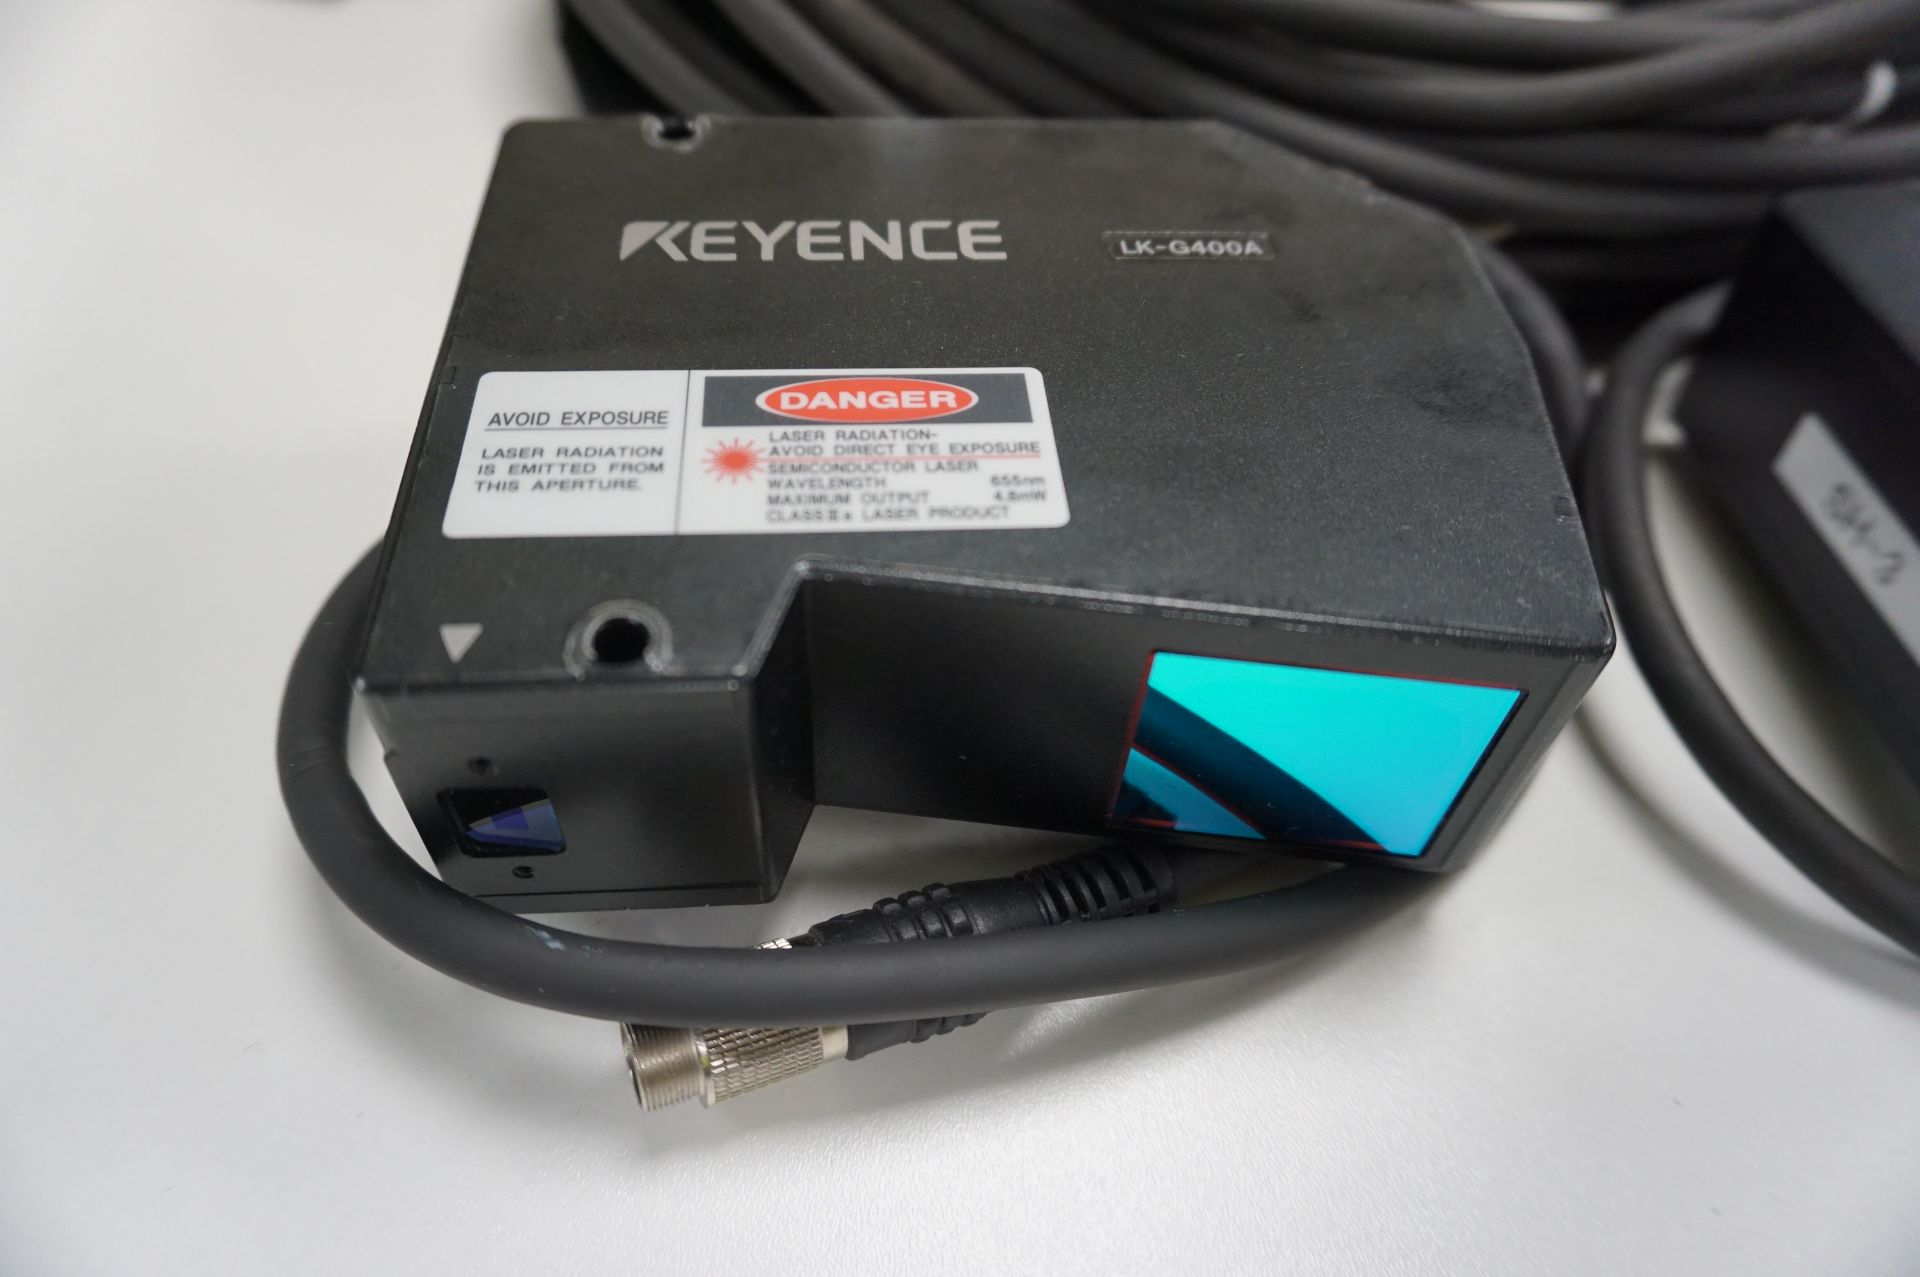 2 x Keyence LK-G400A laser sensors - Image 2 of 3